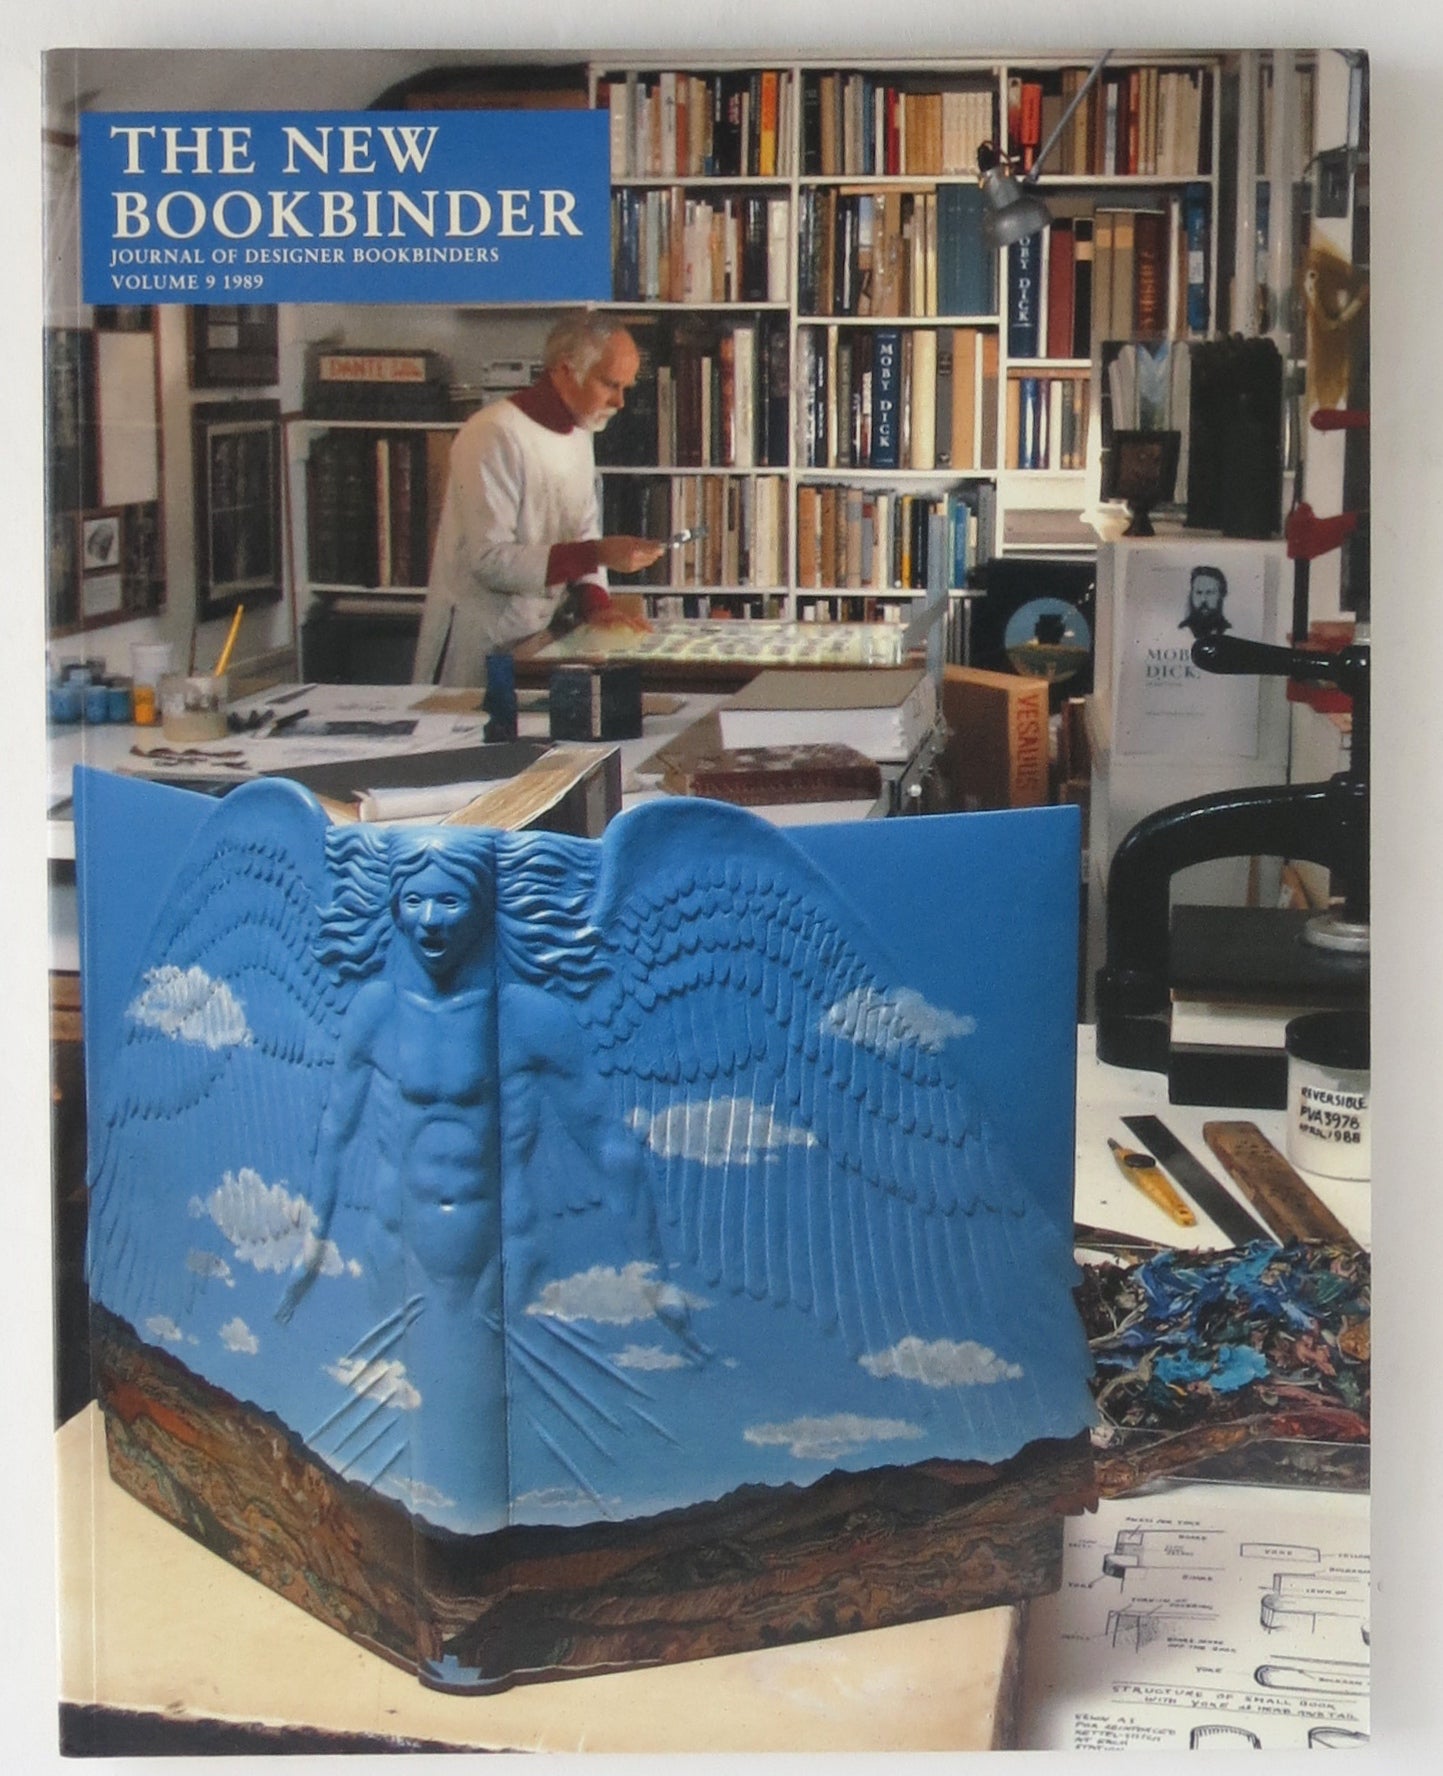 The New Bookbinder. Bookbinding